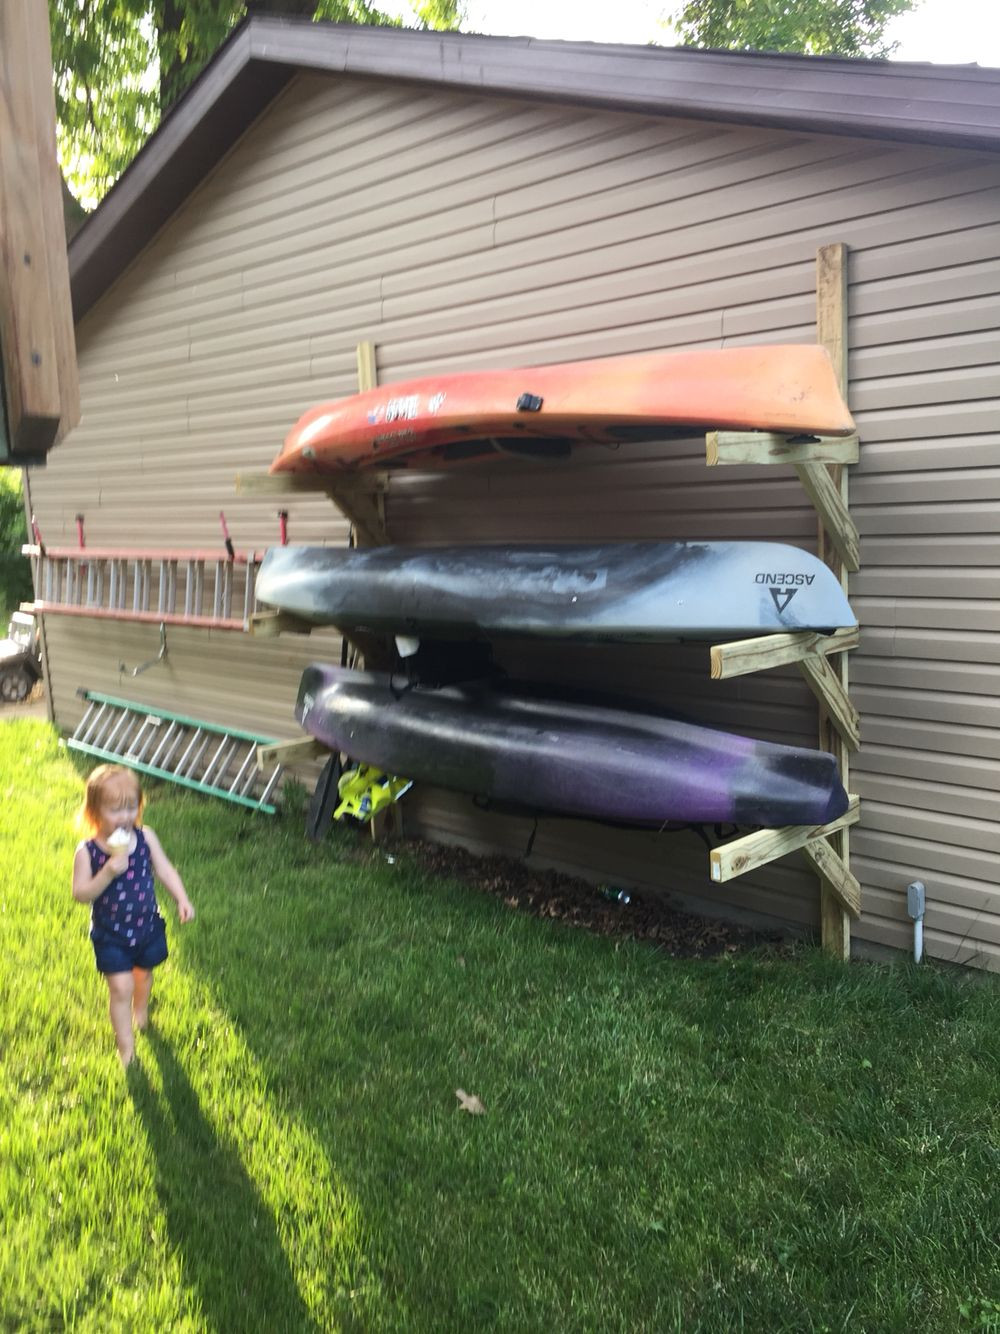 kayak racks